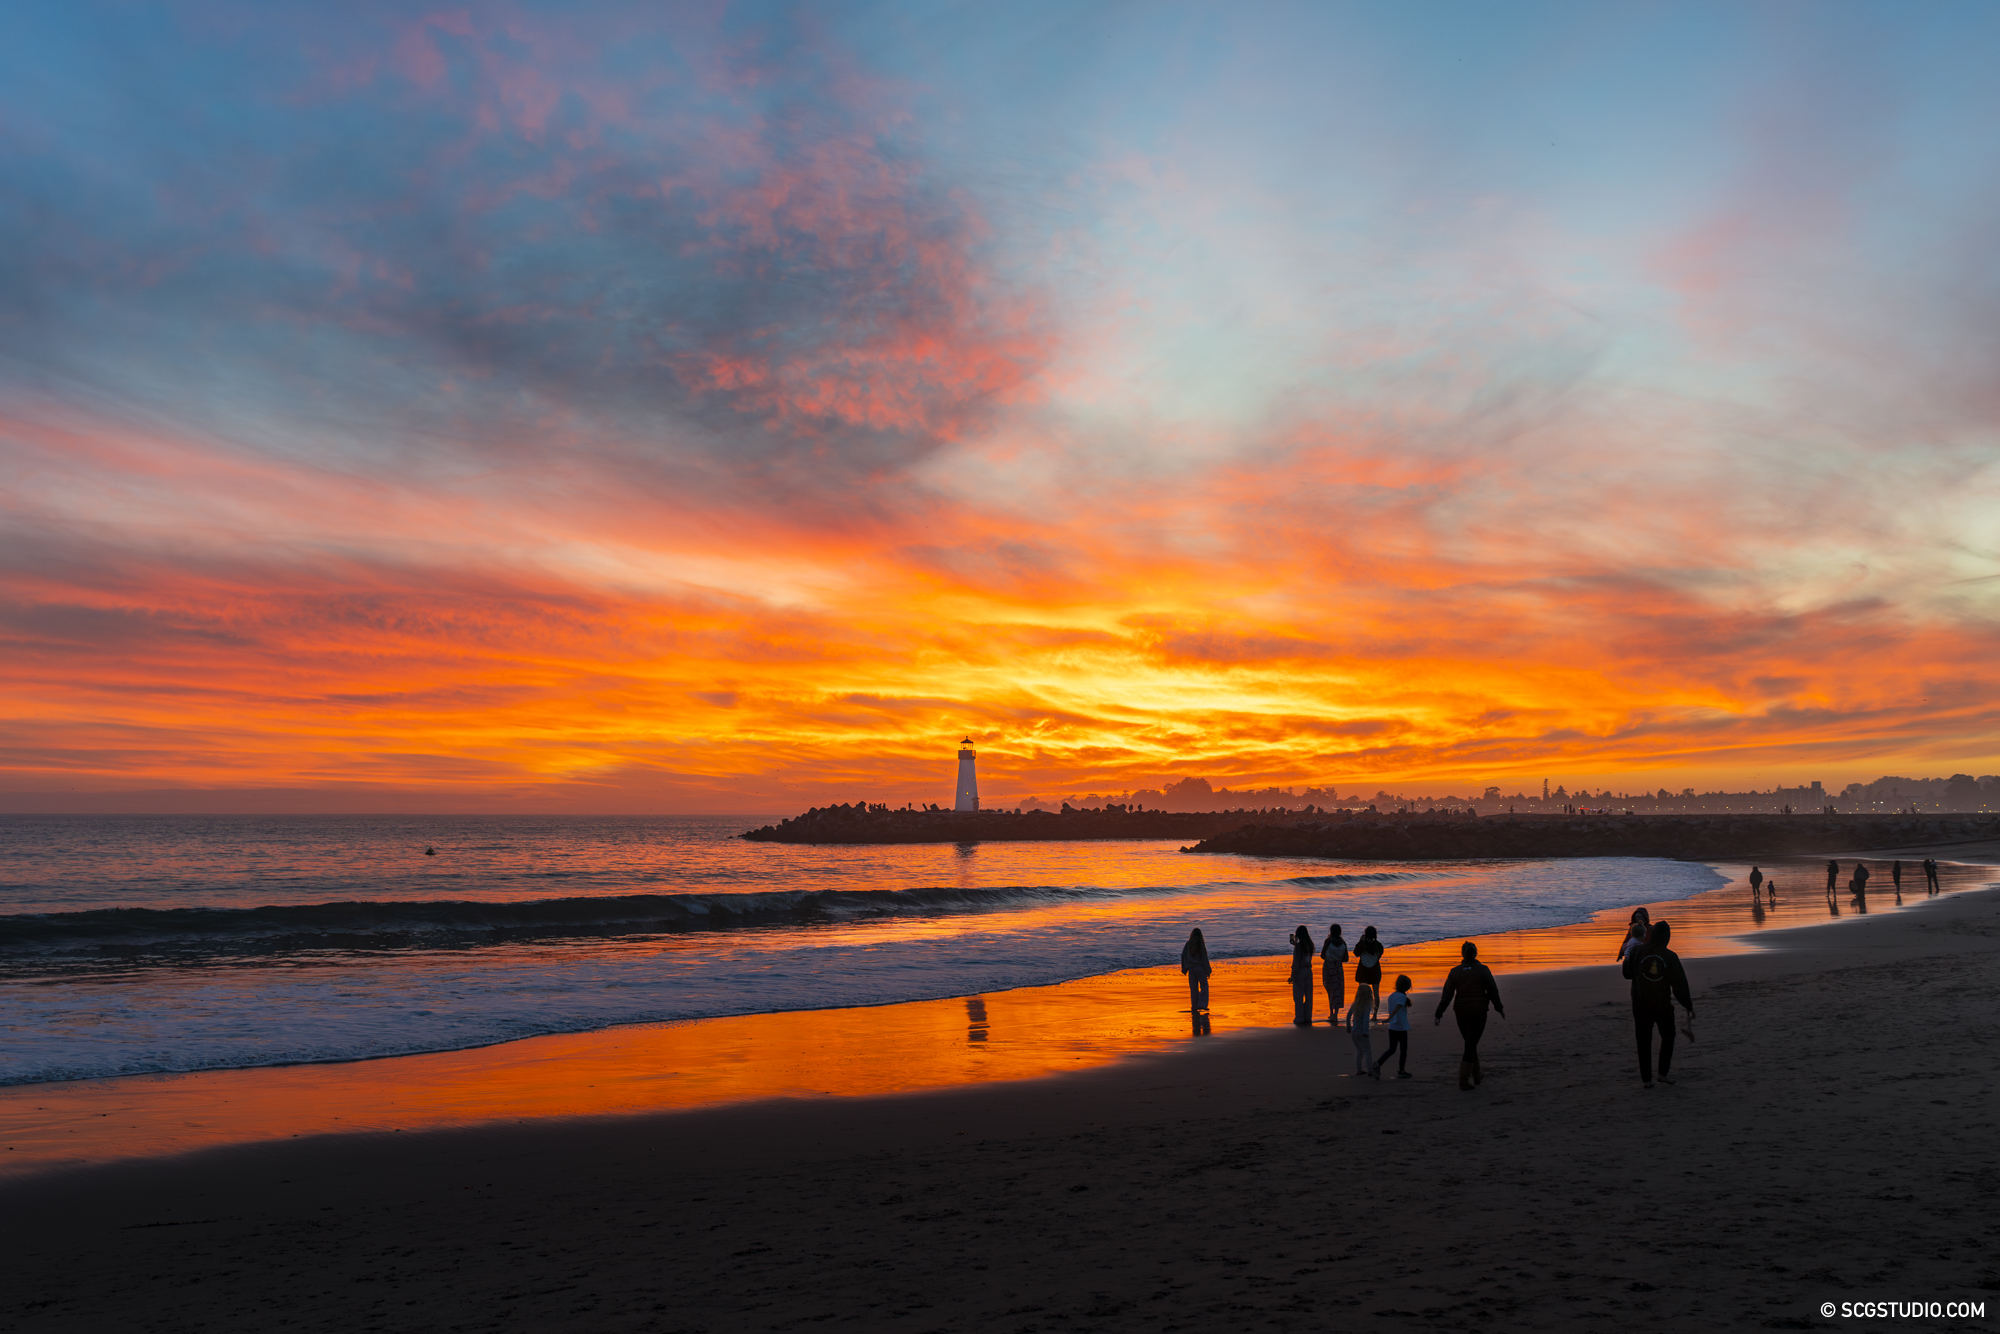 The golden hour at the Santa Cruz Breakwater Lighthouse